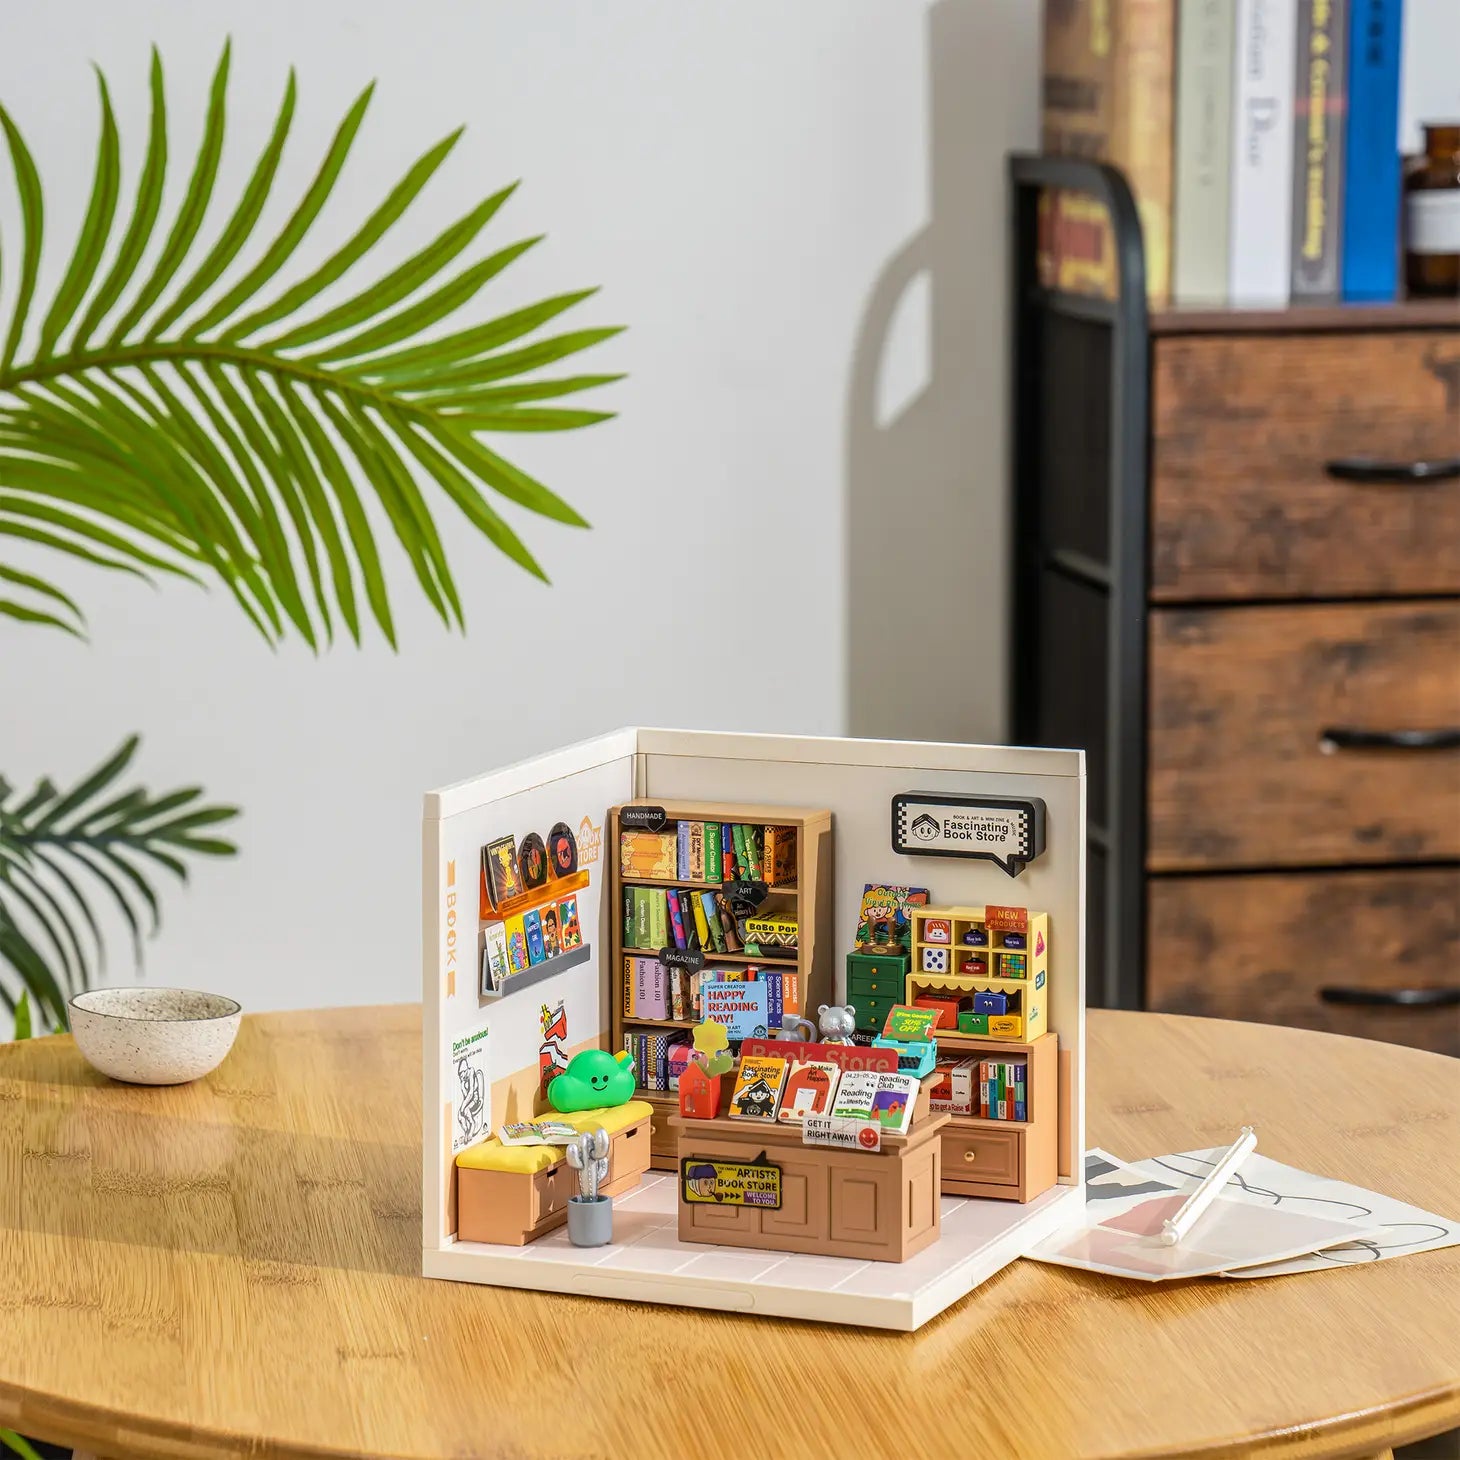 Garden House Book Nook DIY Miniature Kit – Riley Grae Store